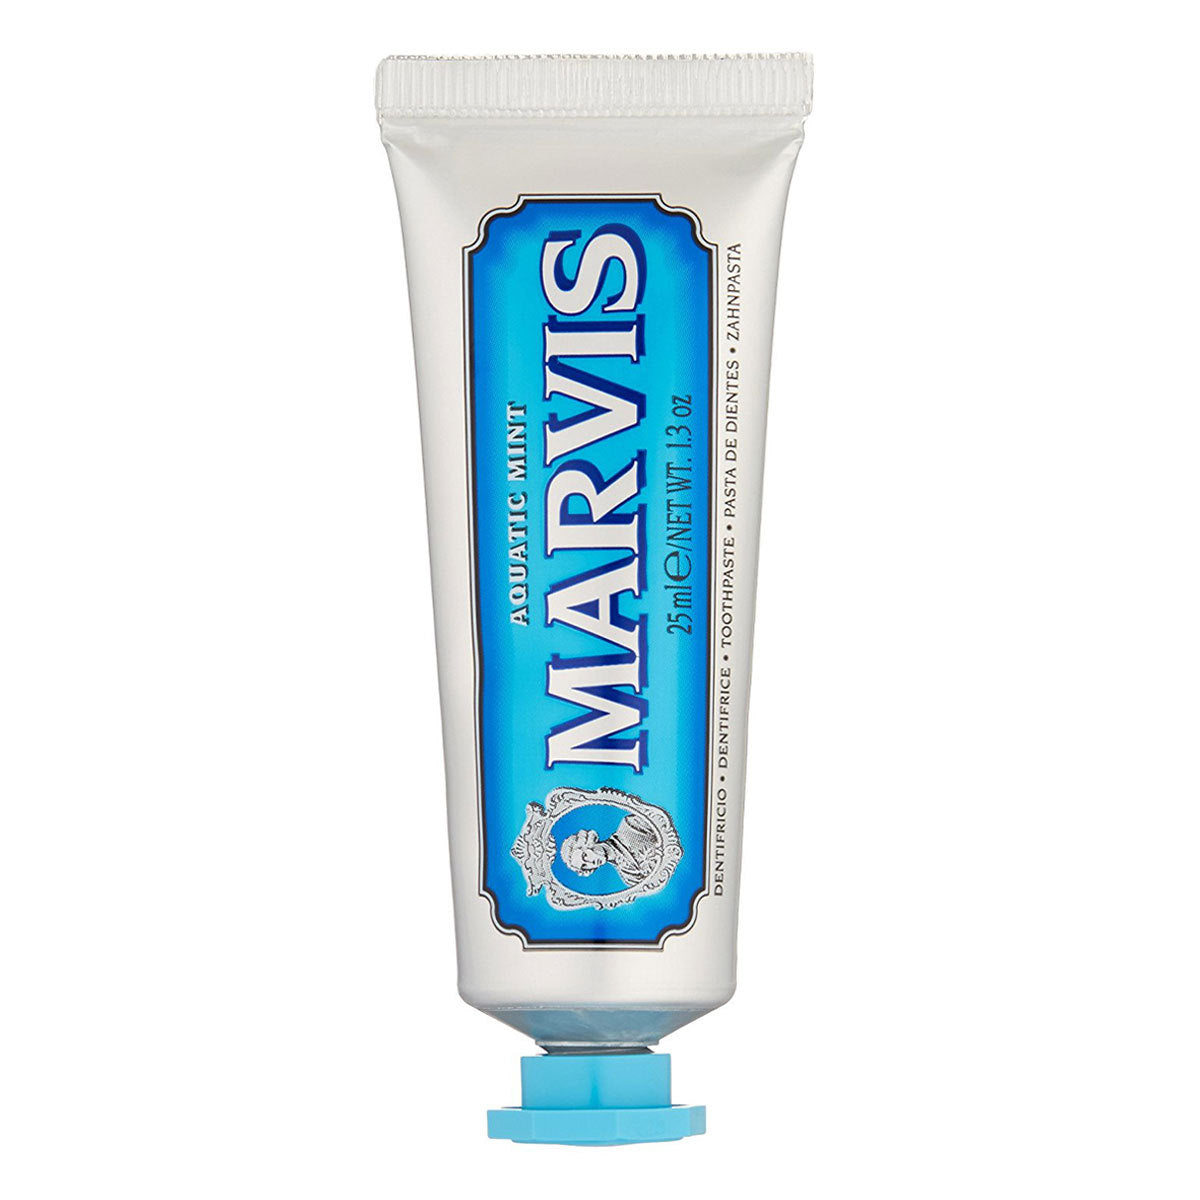 Primary image of Aquatic Mint Travel Toothpaste